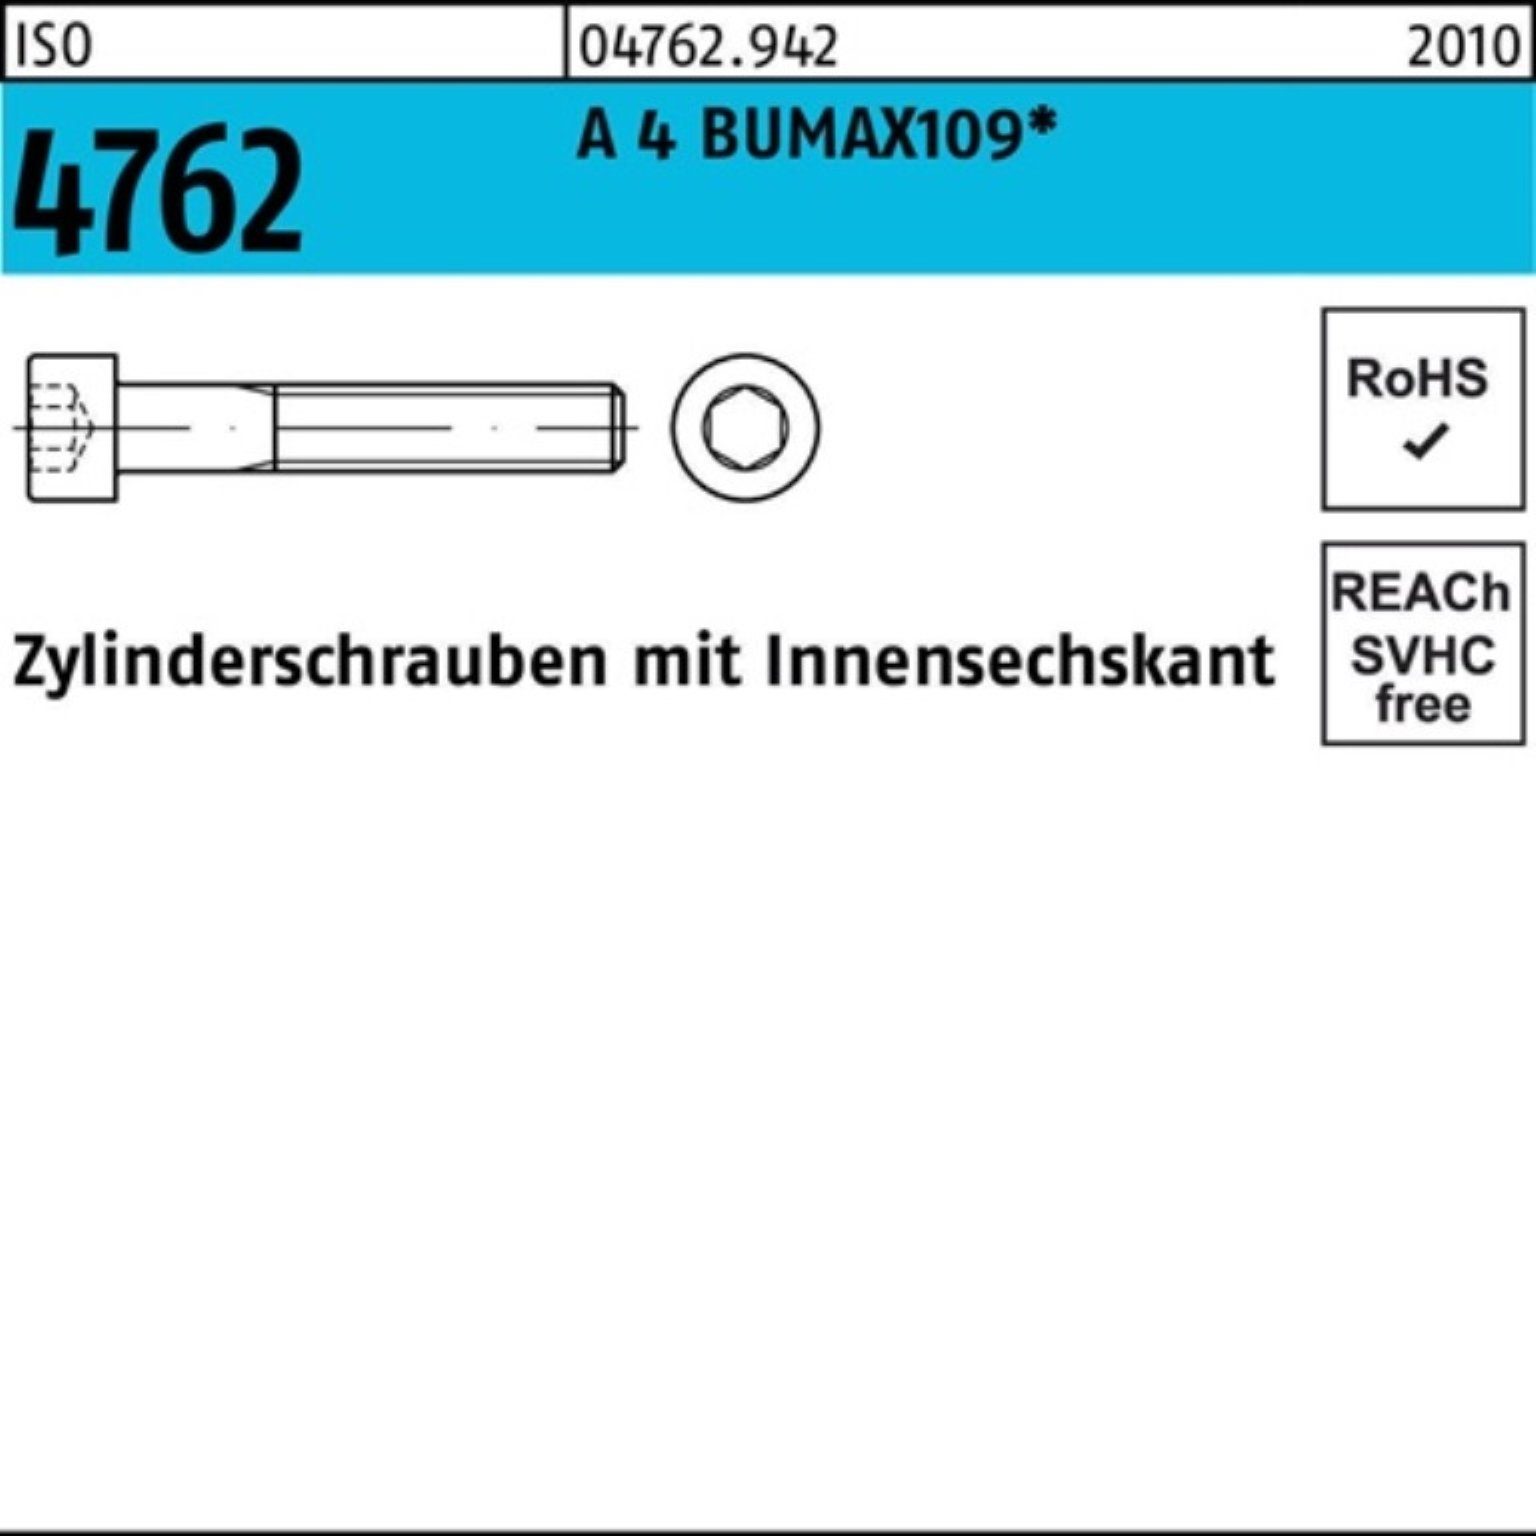 Bufab Zylinderschraube 100er Pack Zylinderschraube ISO 4762 Innen-6kt M10x 30 A 4 BUMAX109 50